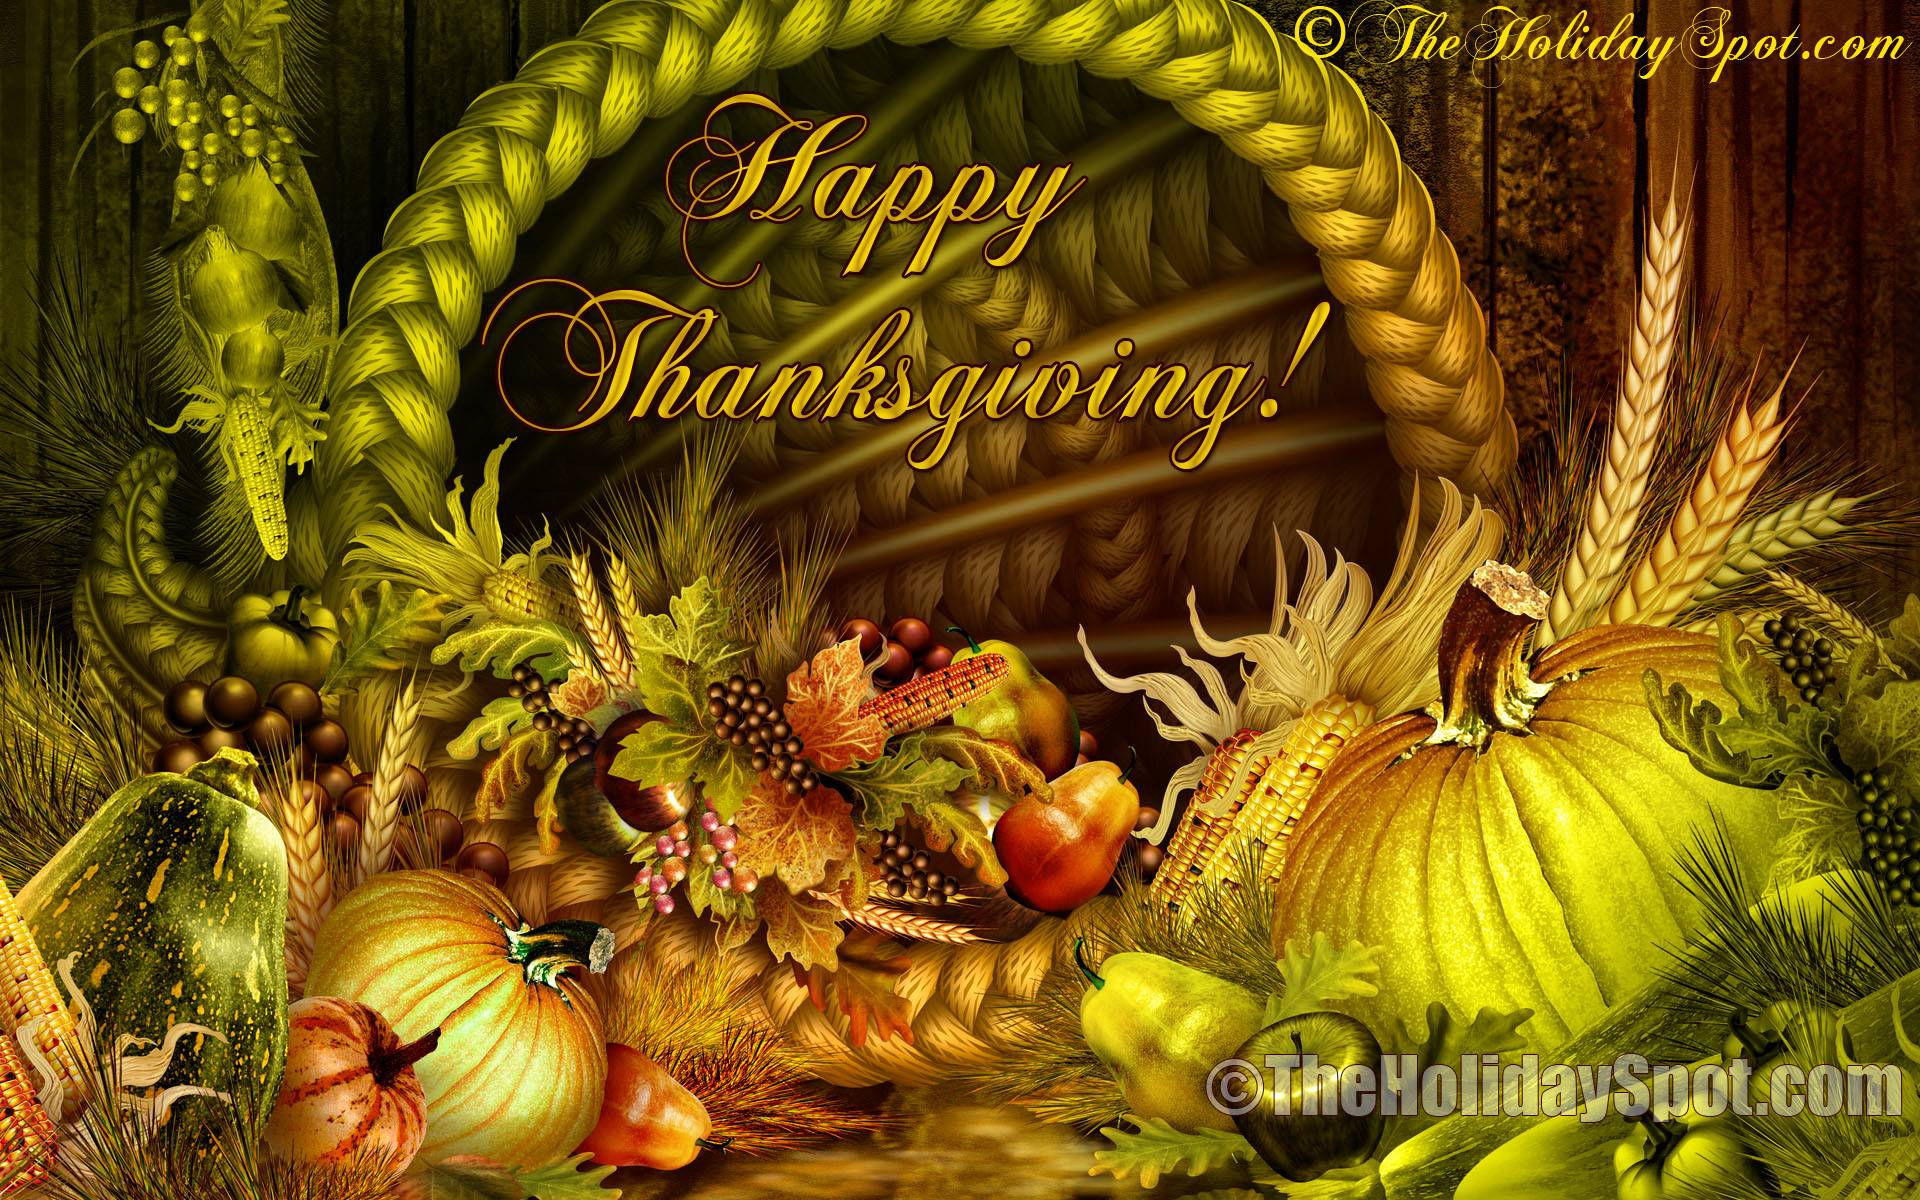 Enchanting Thanksgiving Turkey Wallpaper for Deskx1200PX